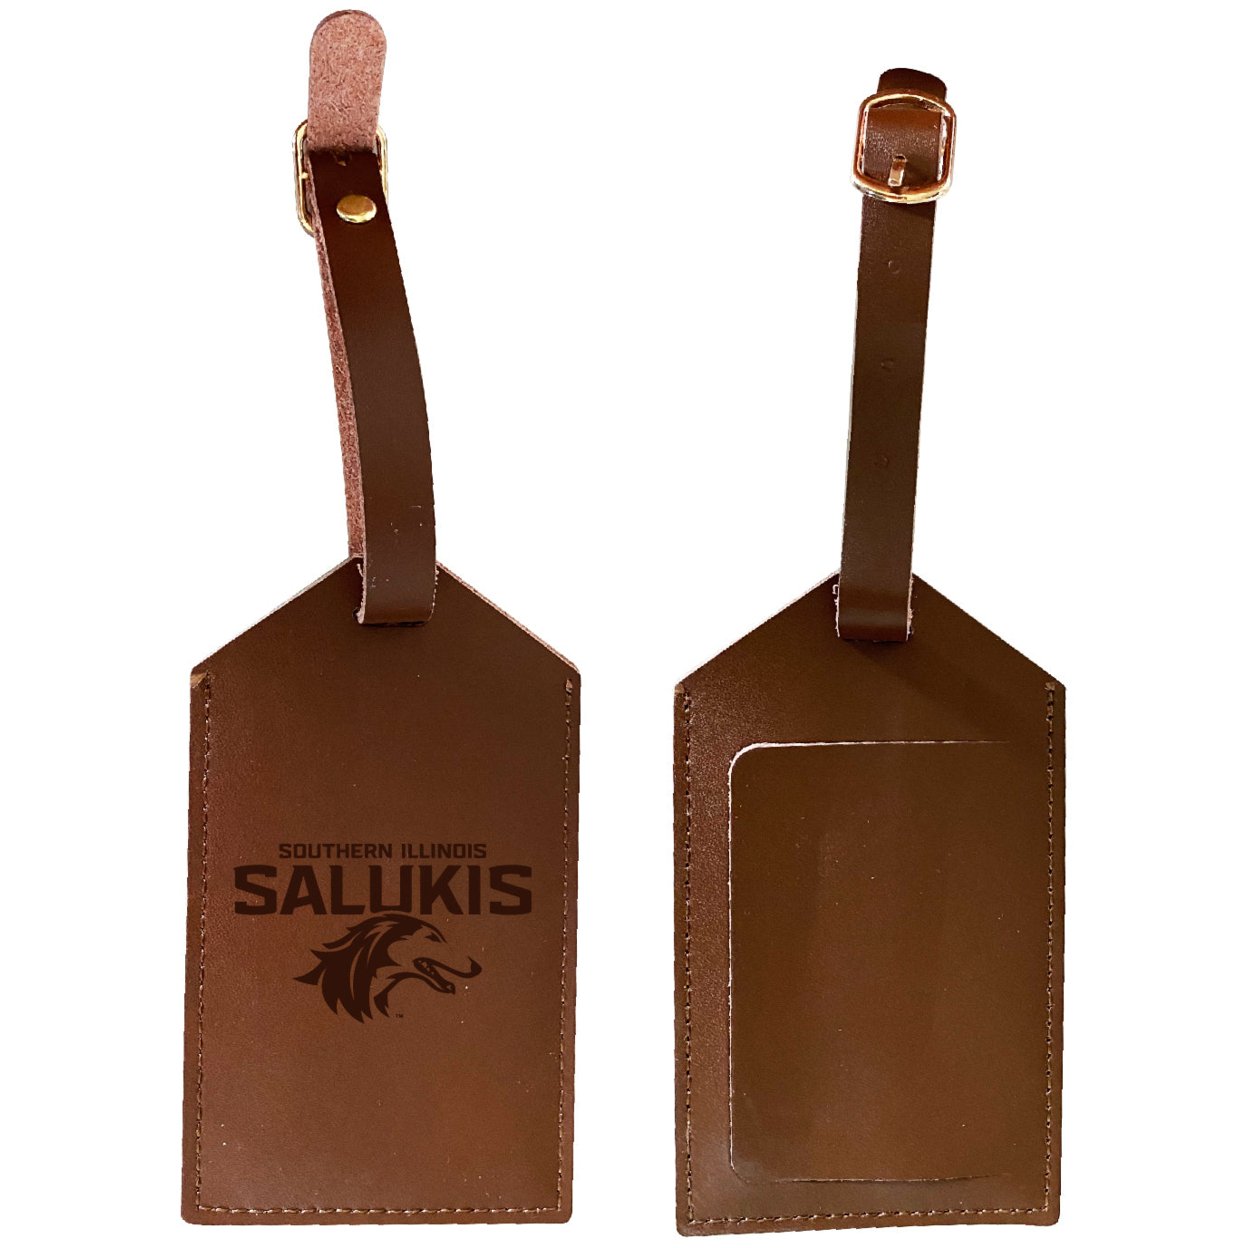 Southern Illinois Salukis Leather Luggage Tag Engraved